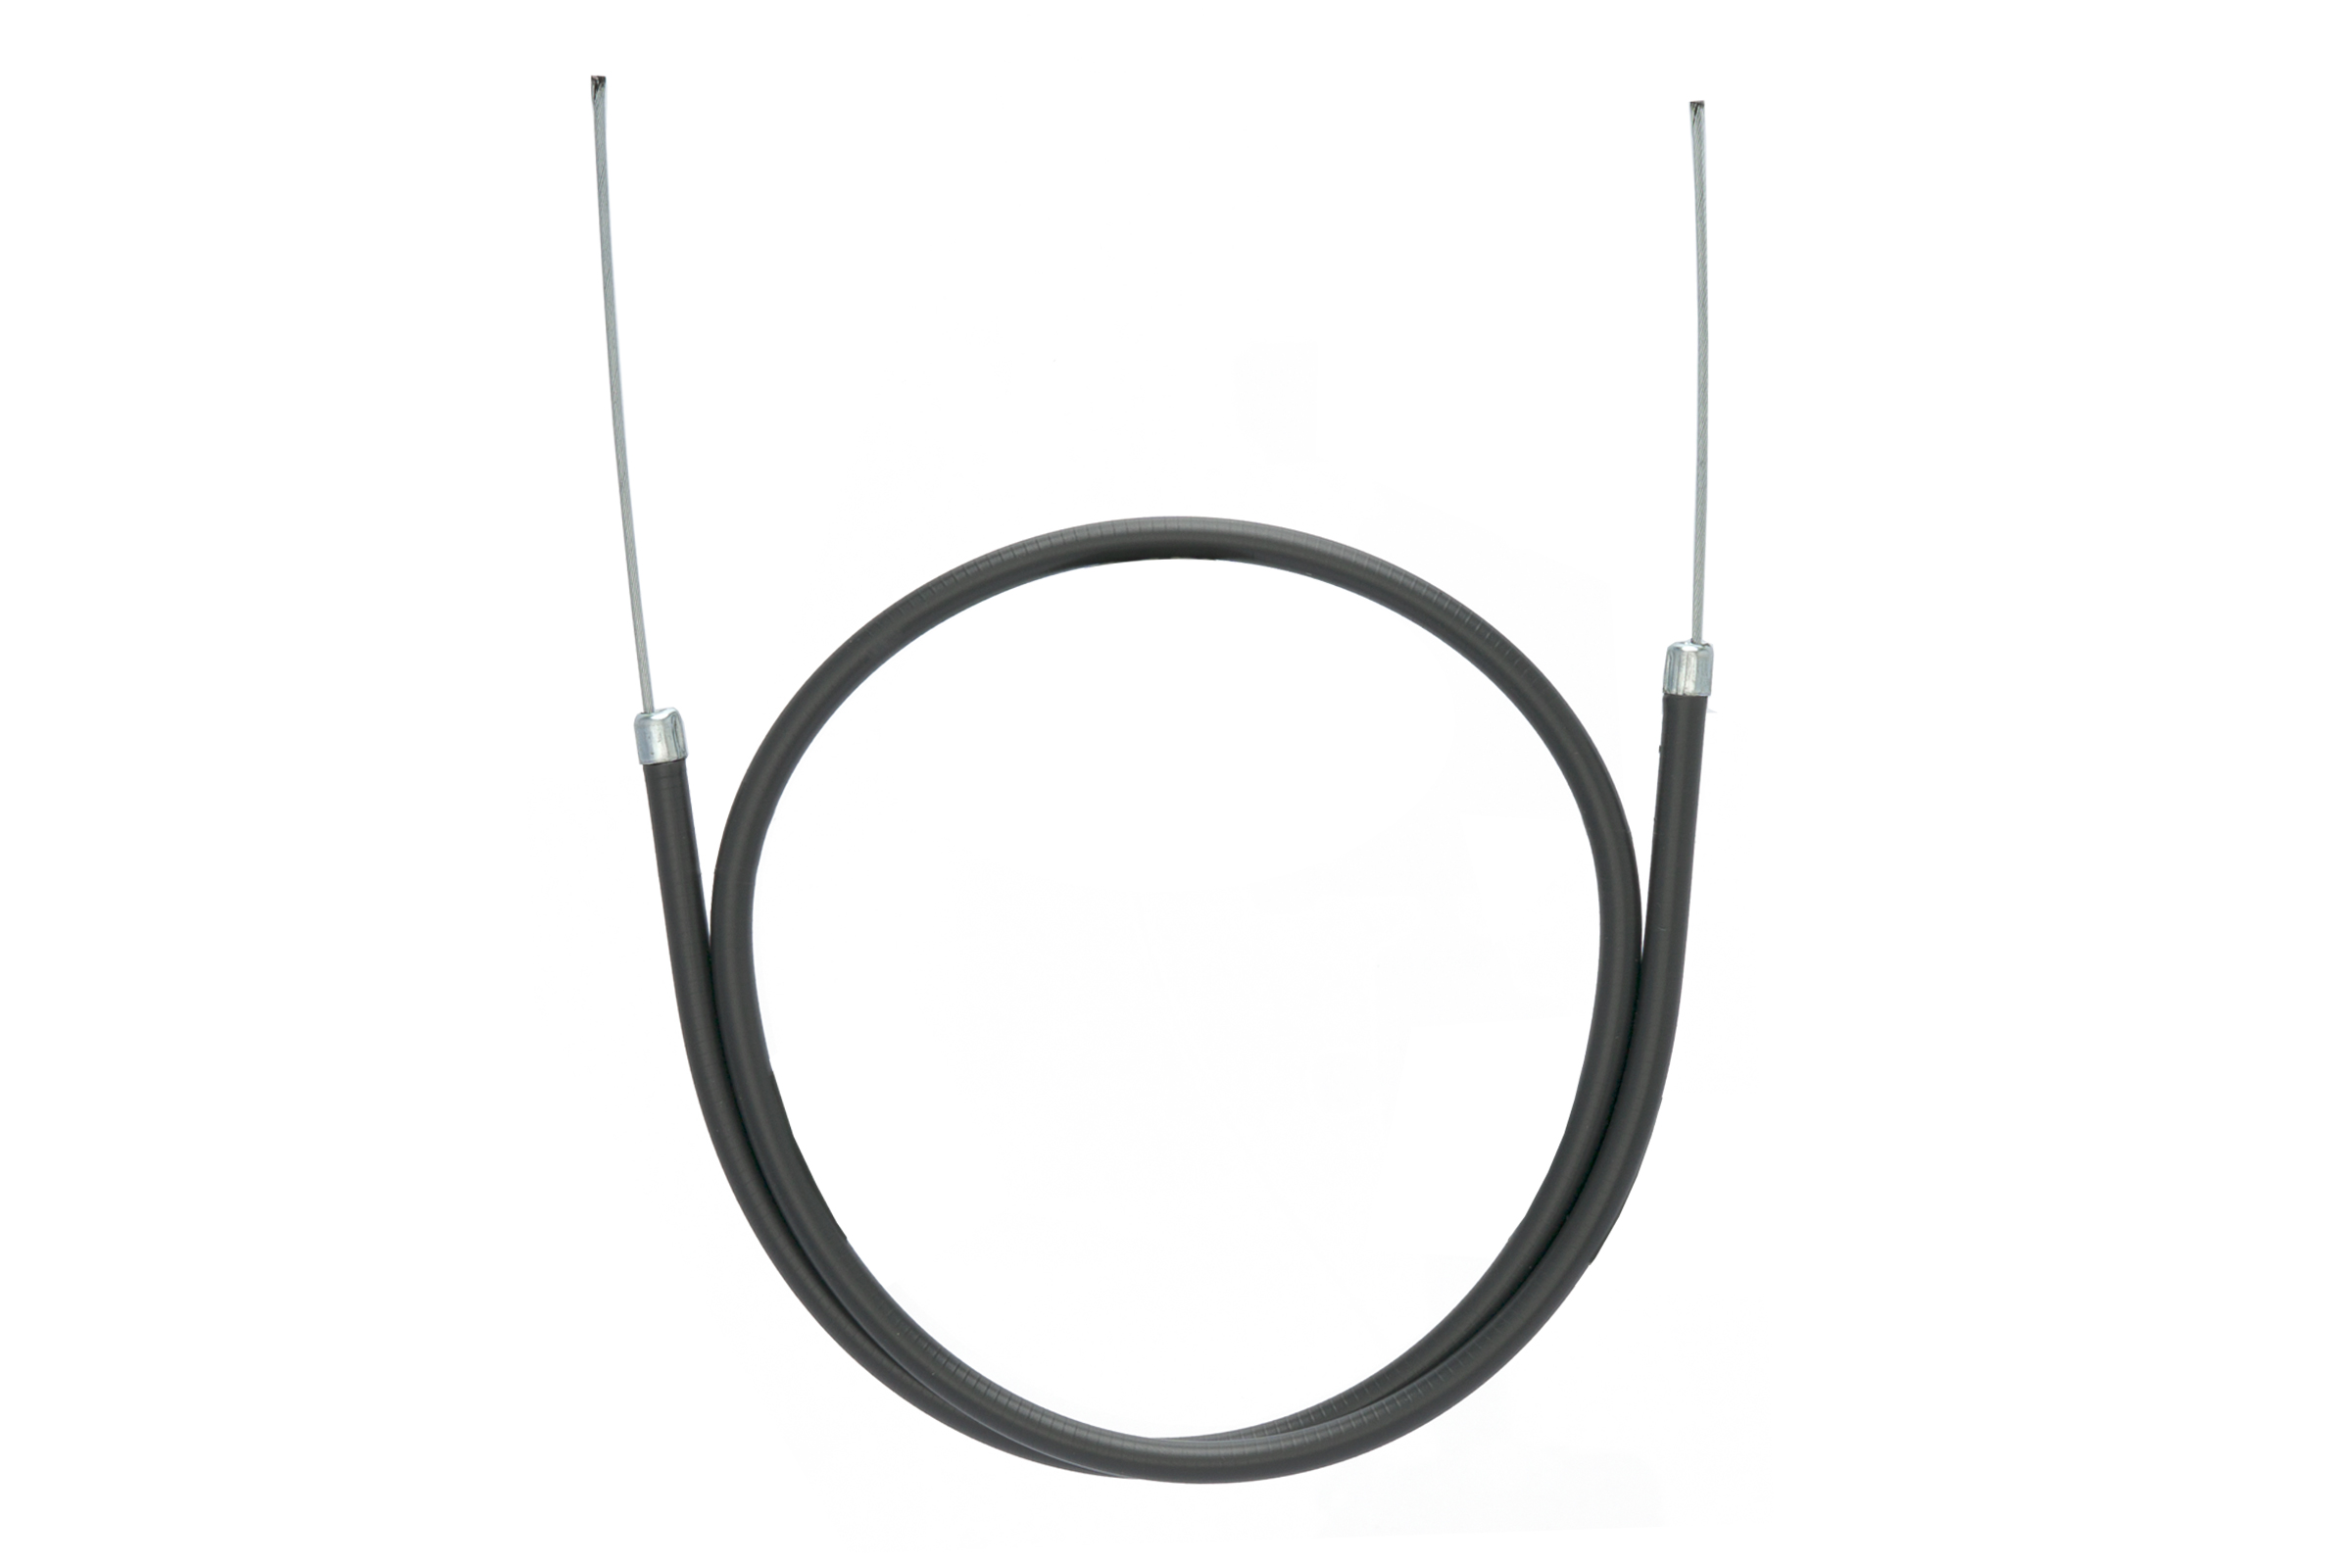 Bonnet Cable – Giulia Super